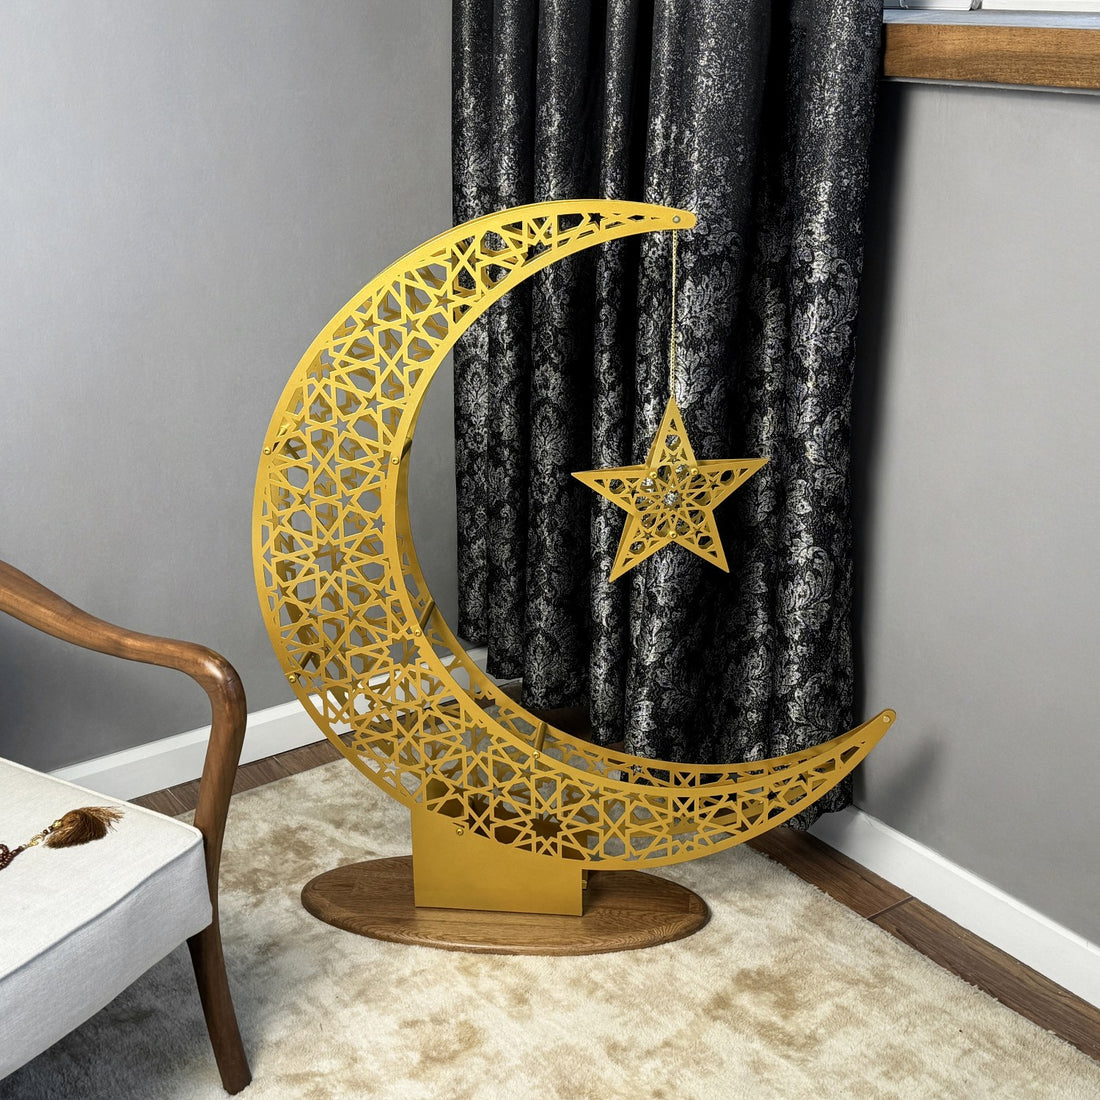 metal-crescent-star-islamic-home-decoration-ramadan-decor-gold-colored-eid-gift-shukranislamicarts